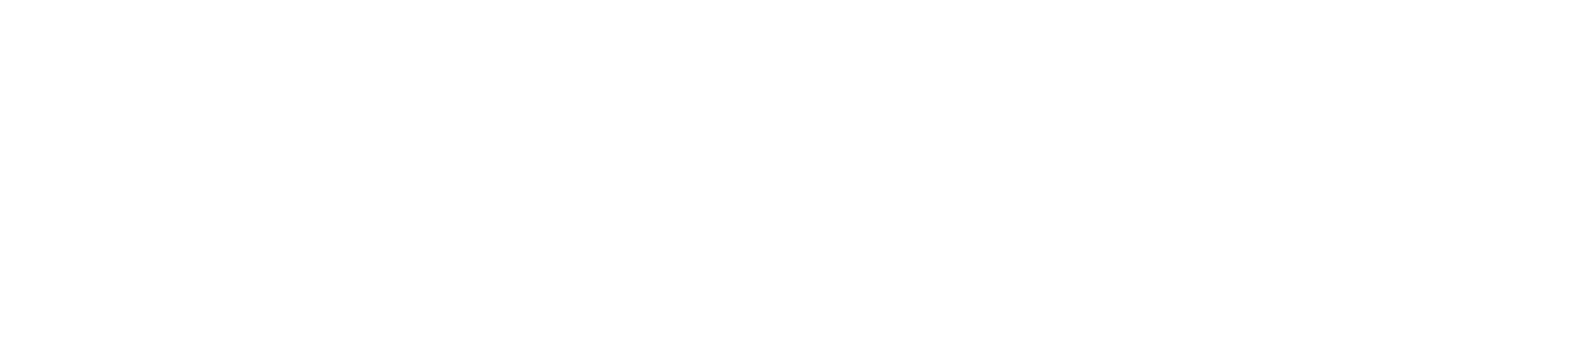 Advantage Solutions Logo groß für dunkle Hintergründe (transparentes PNG)